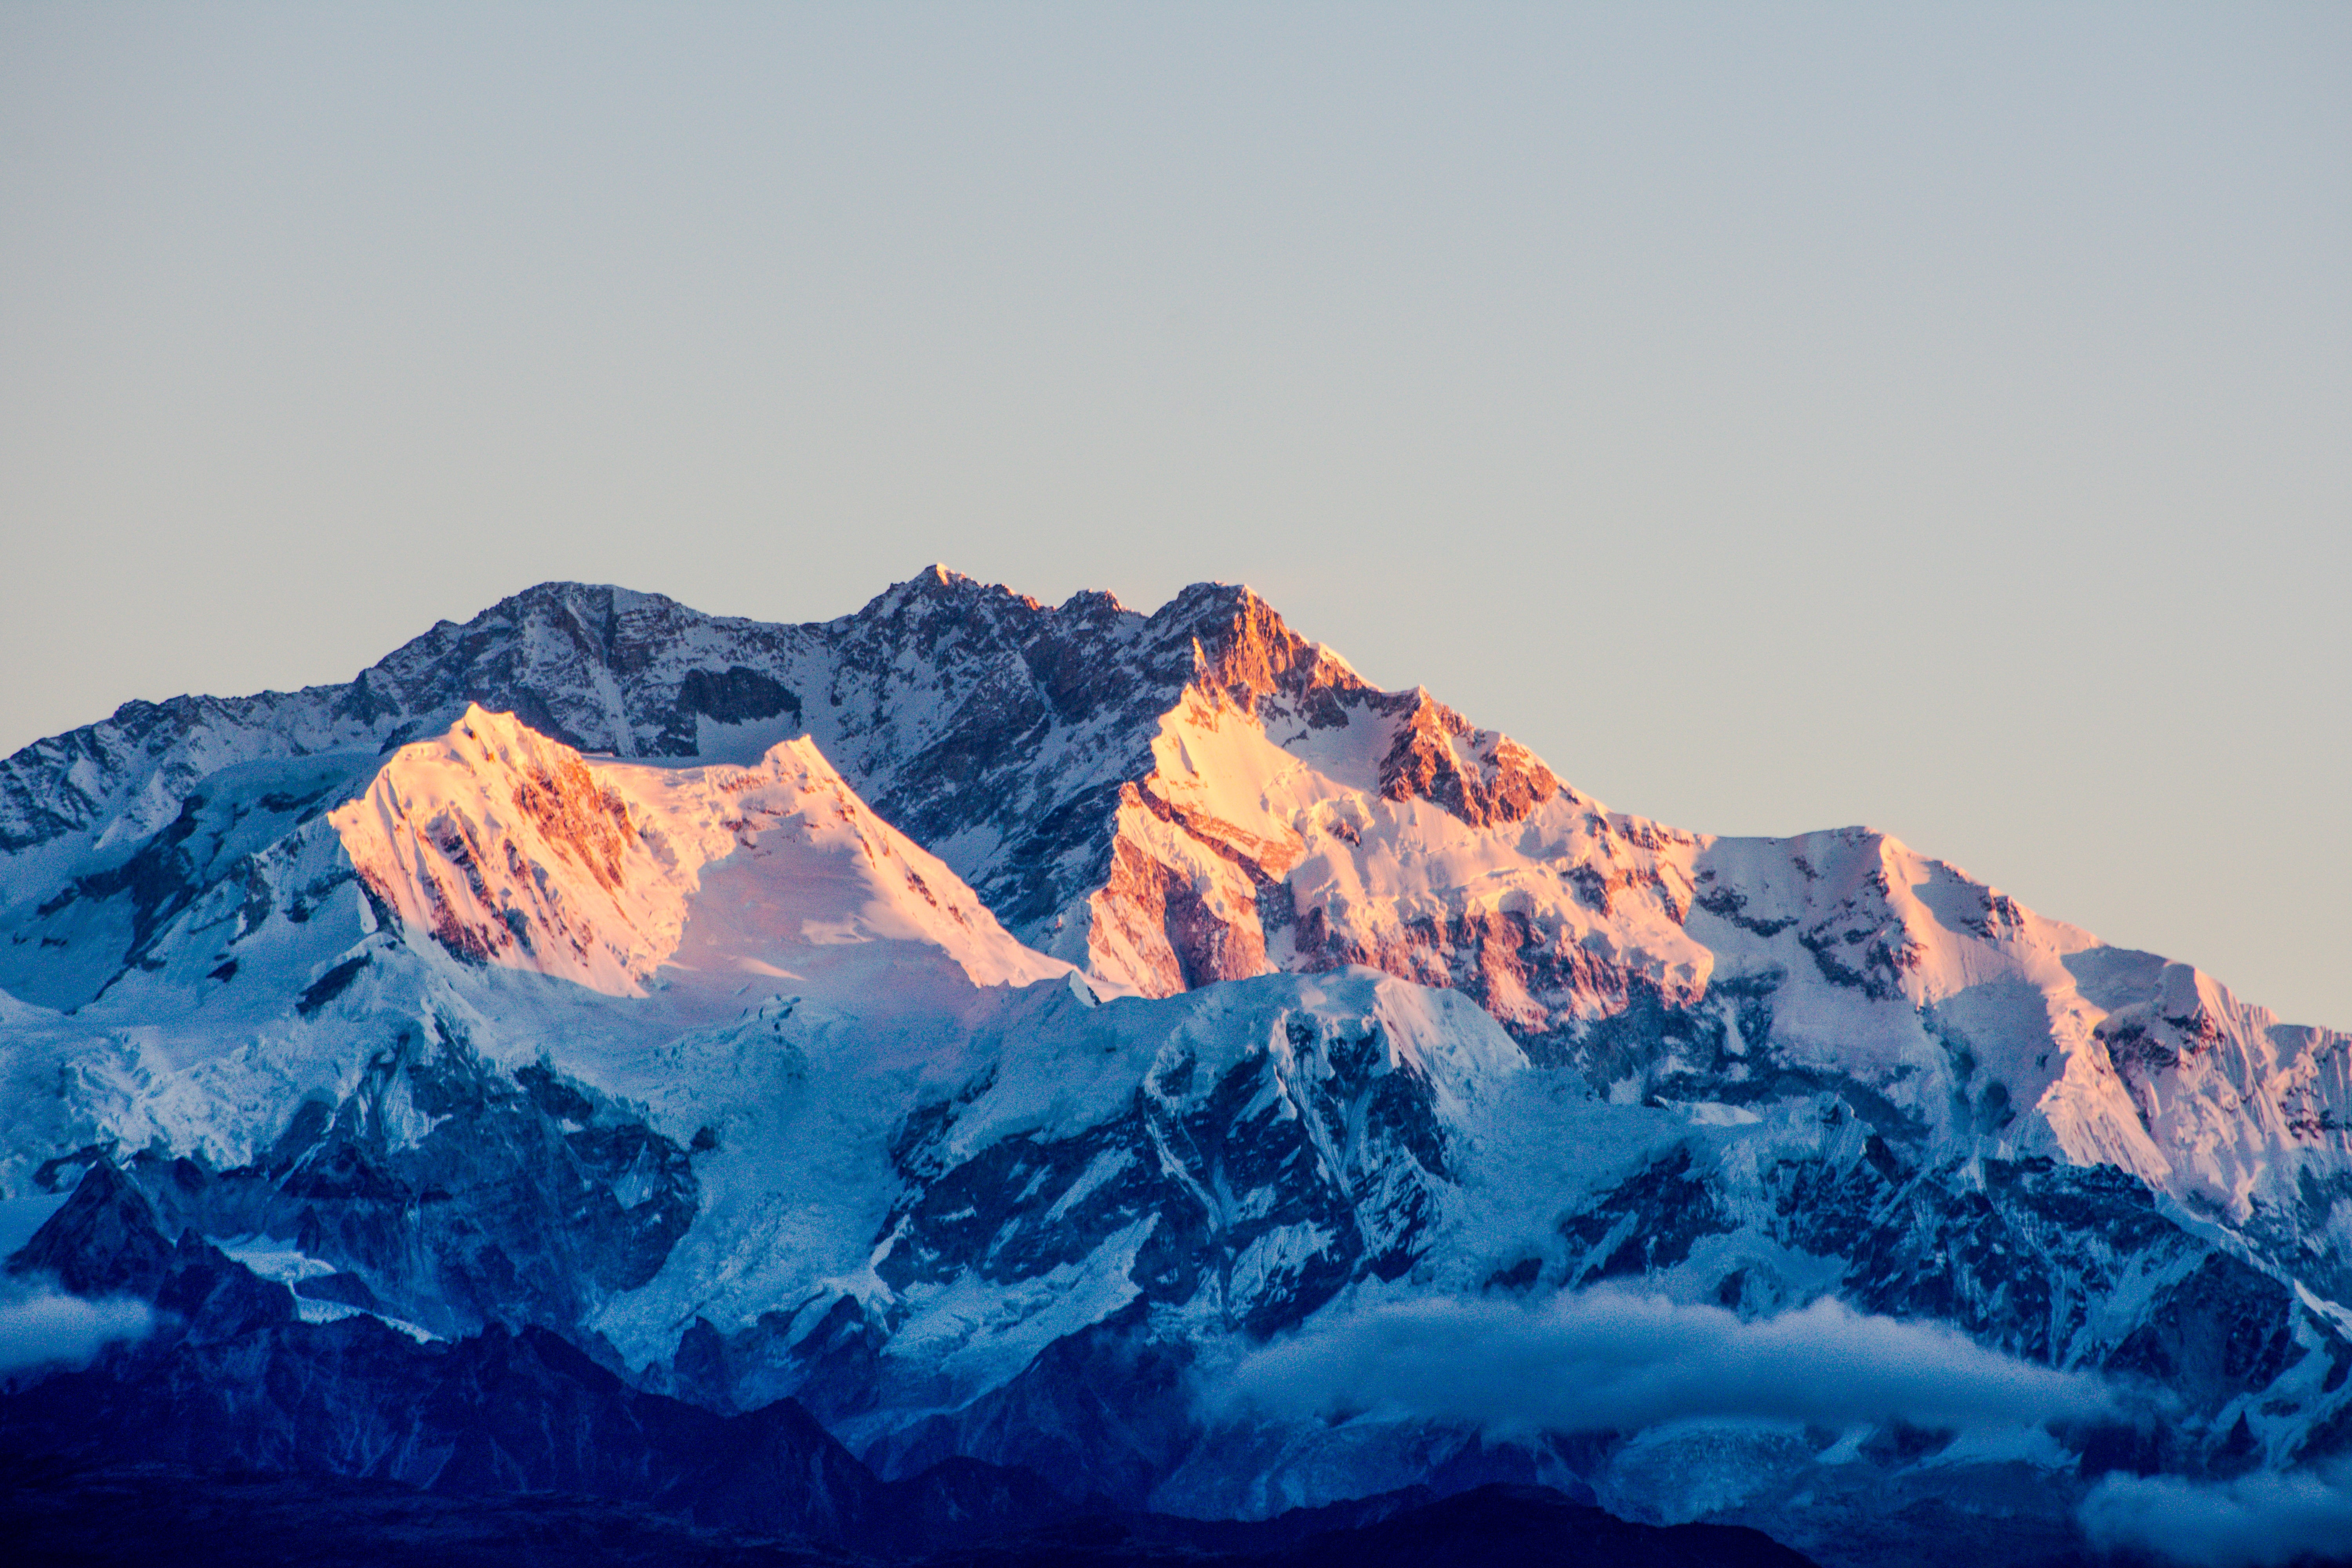 511906 descargar imagen tierra/naturaleza, himalaya, montaña, montañas: fondos de pantalla y protectores de pantalla gratis